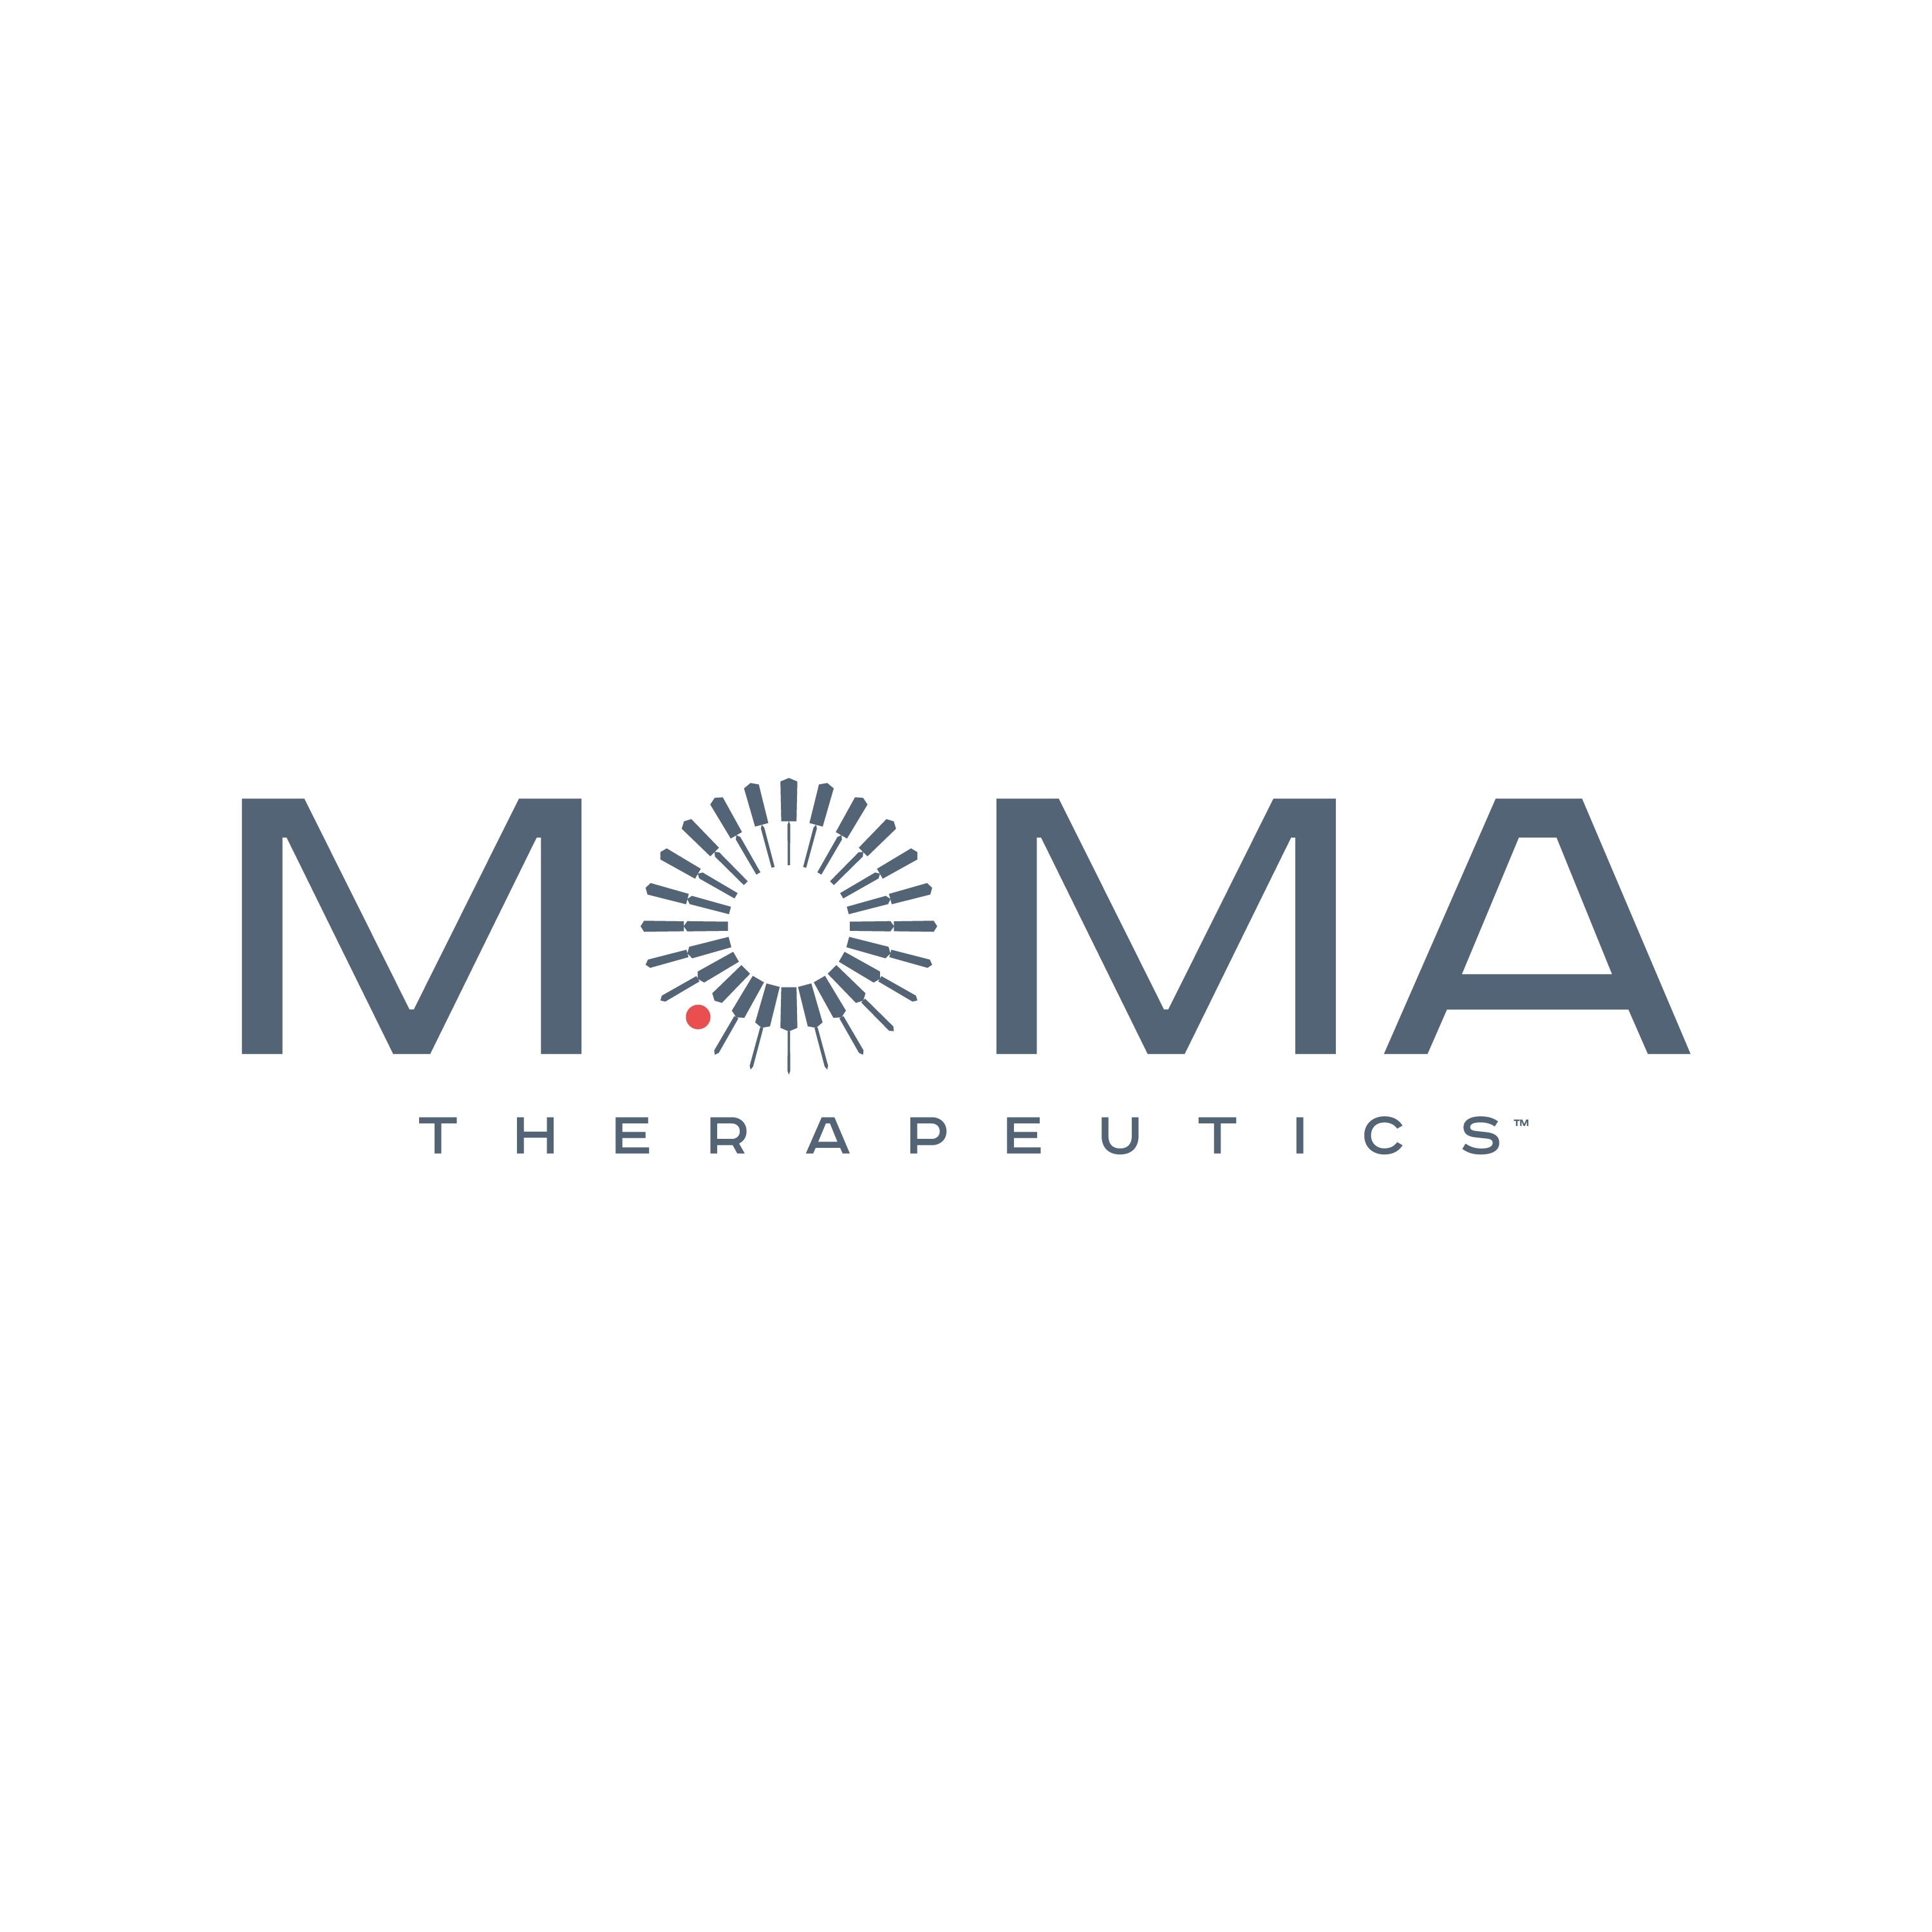 moma logo font